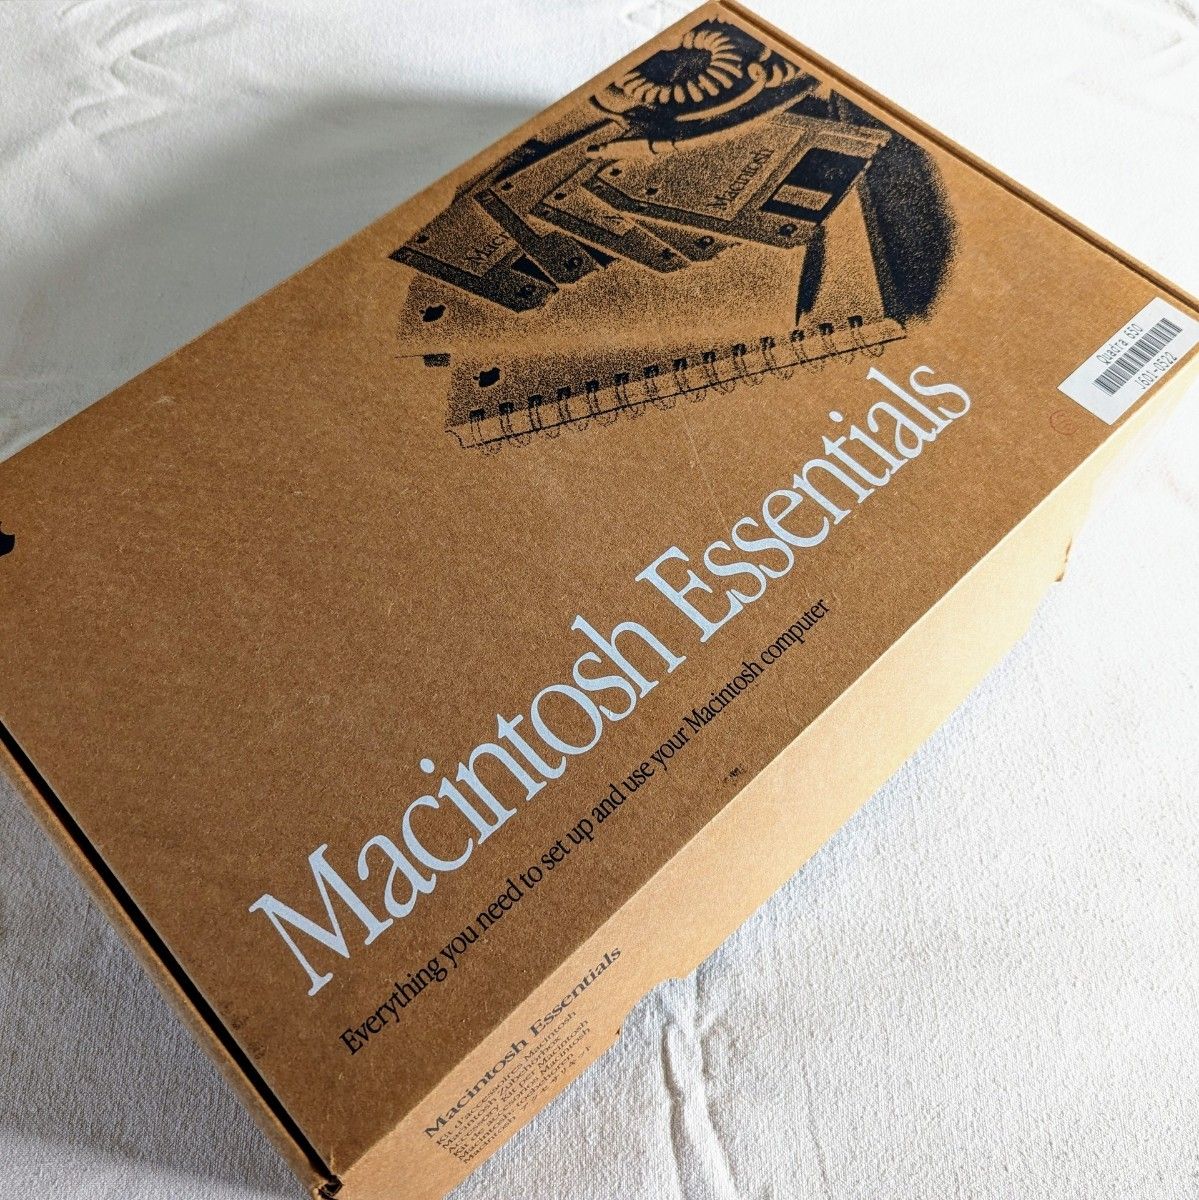 【中古】Macintosh Essentials Quadra650 J601-0522